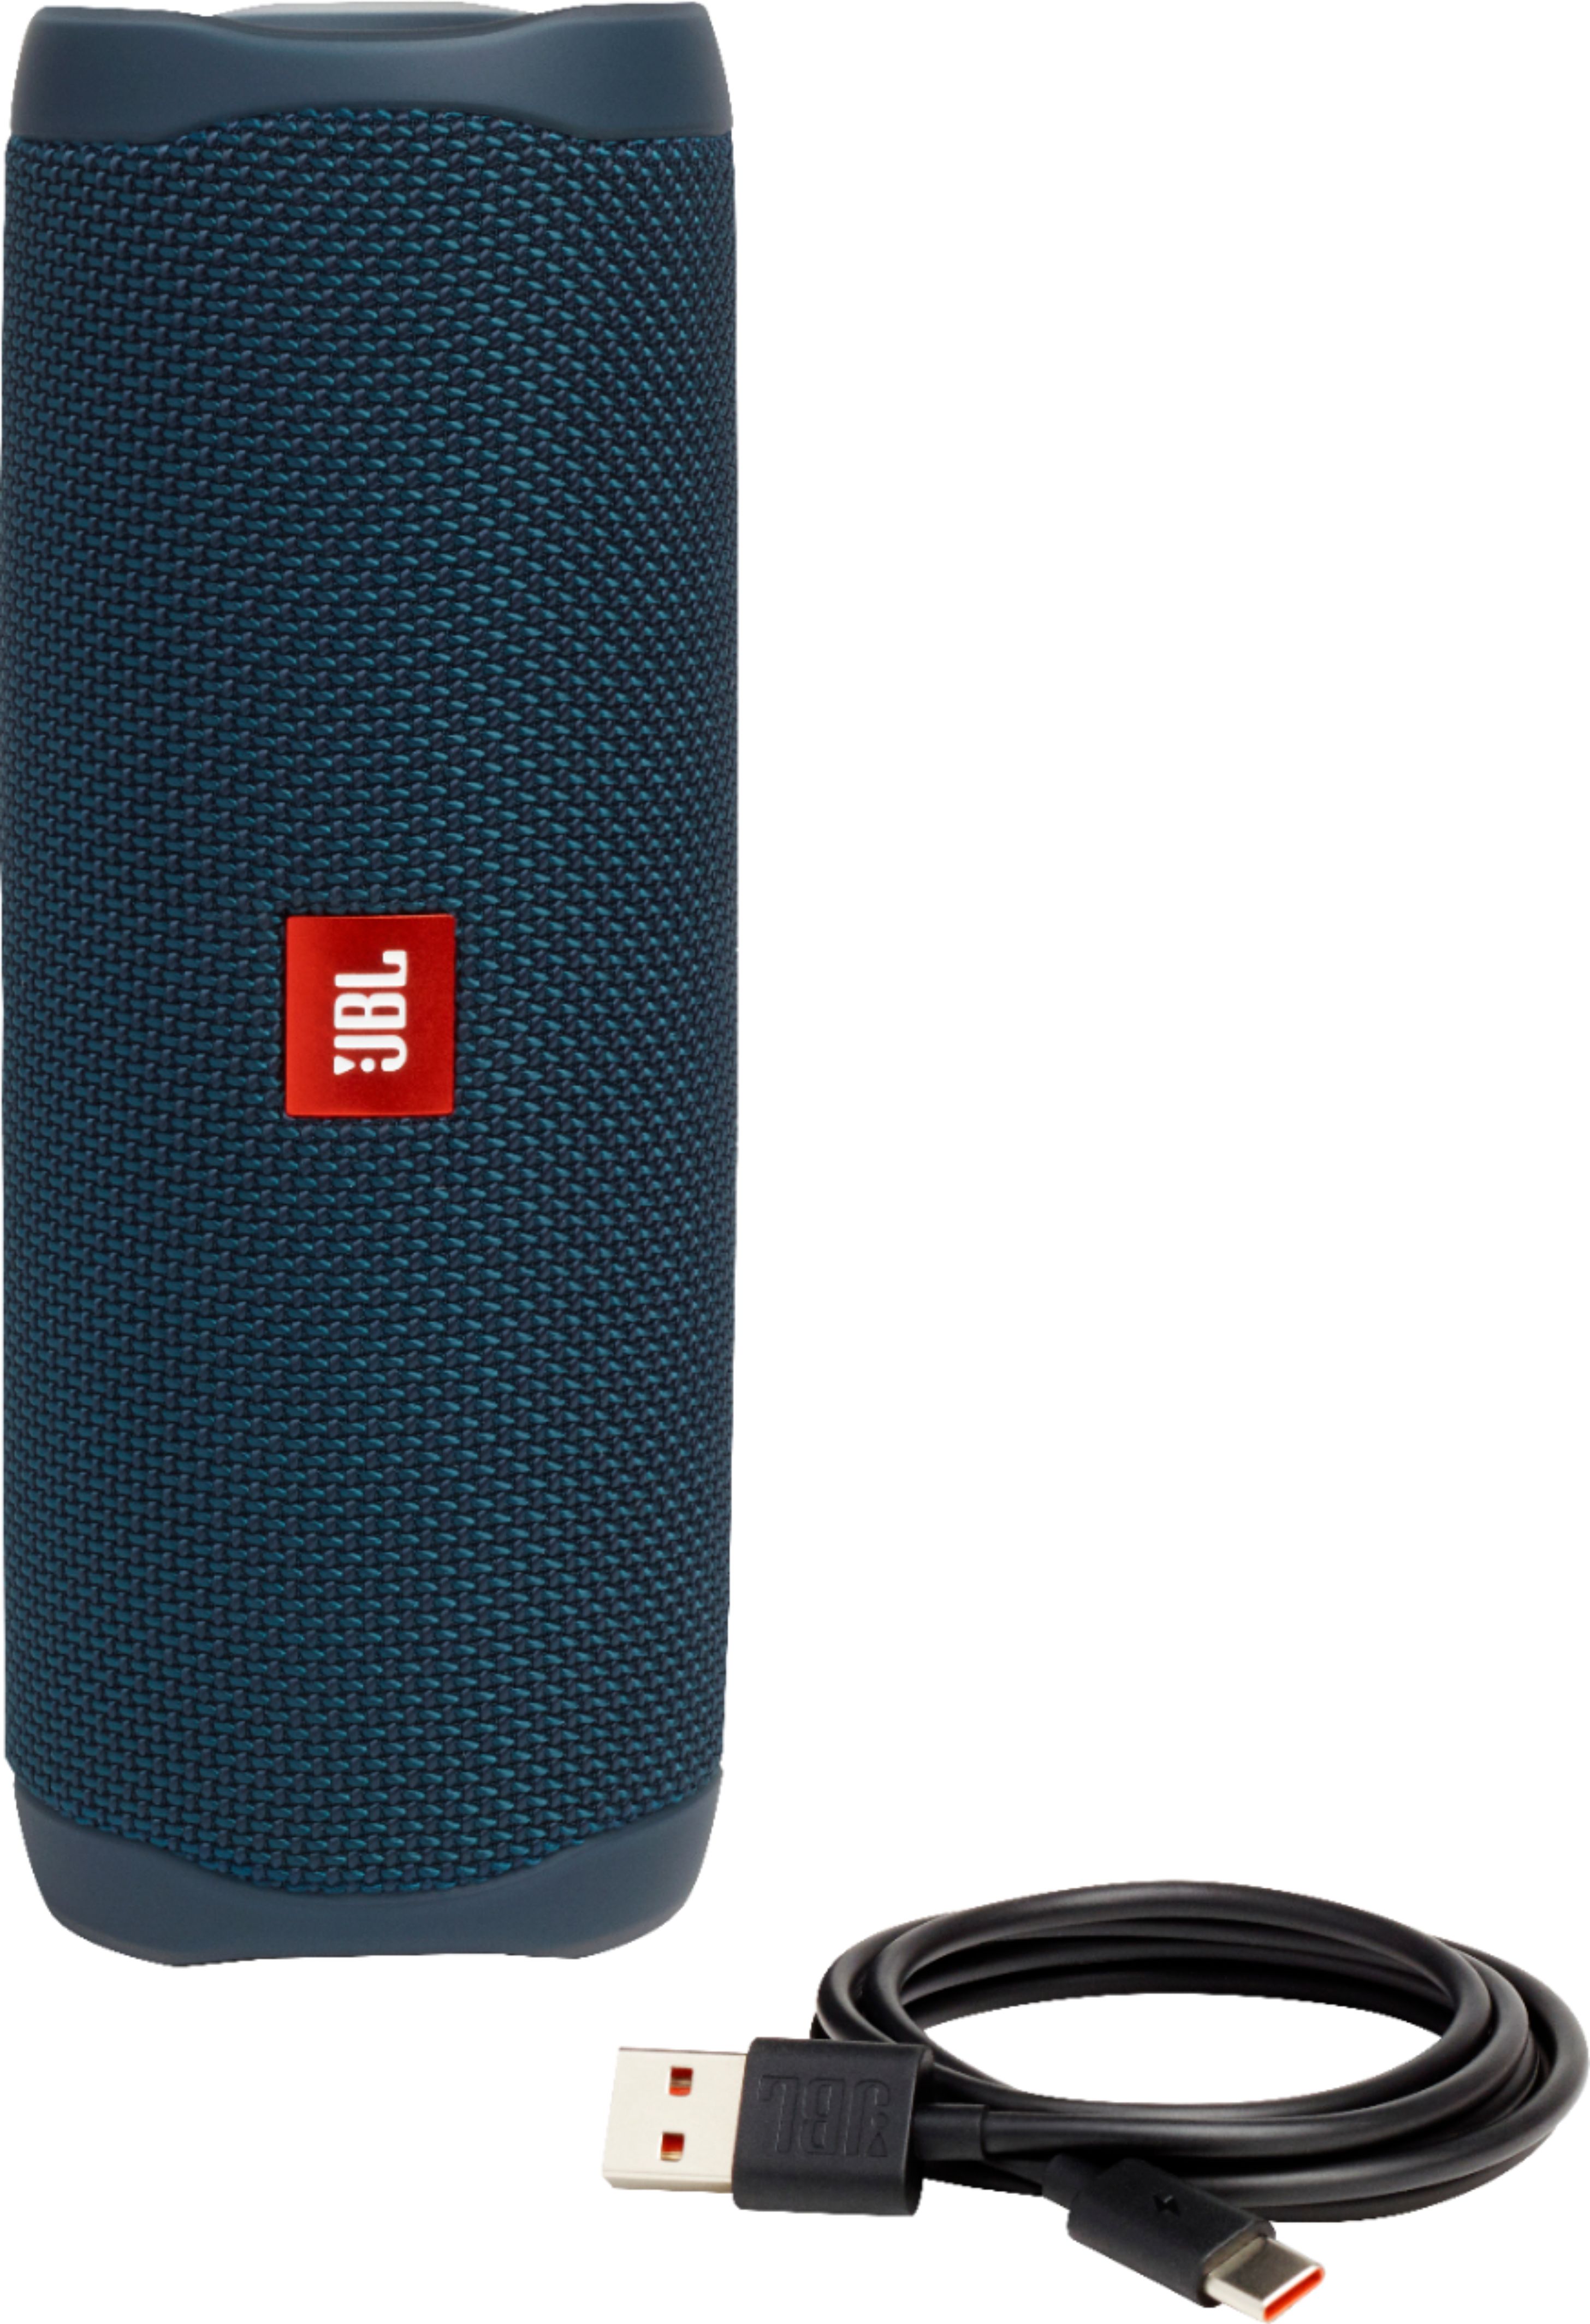 JBL - Flip 5 Portable Bluetooth Speaker - Ocean Blue